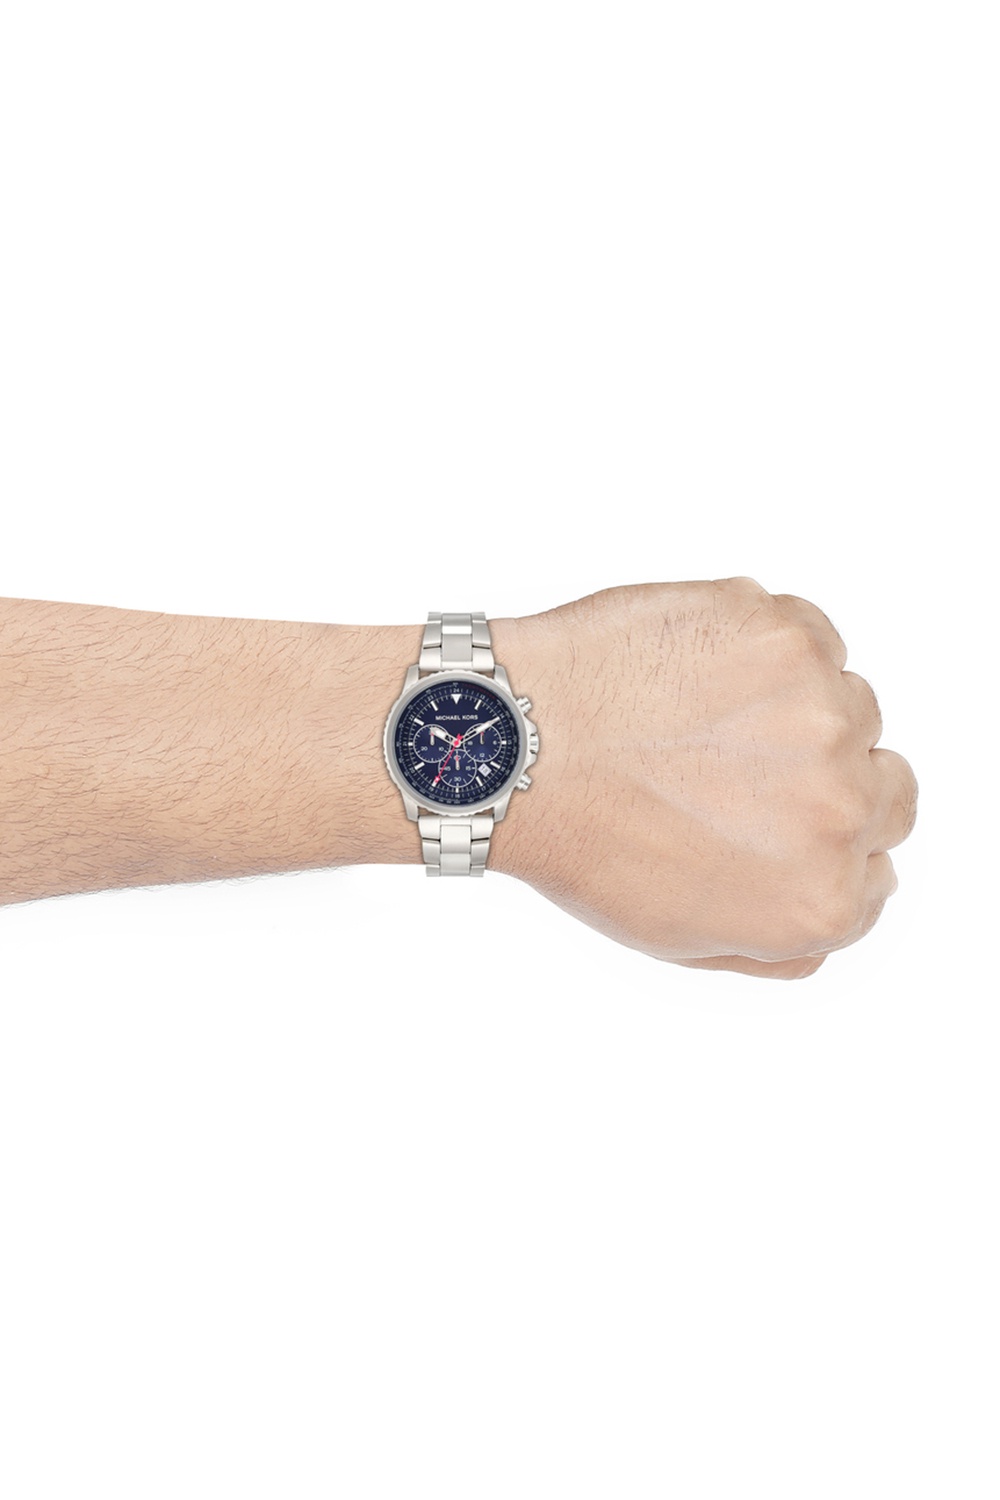 Michael Kors Cortlandt Silver Stainless Steel Watch 